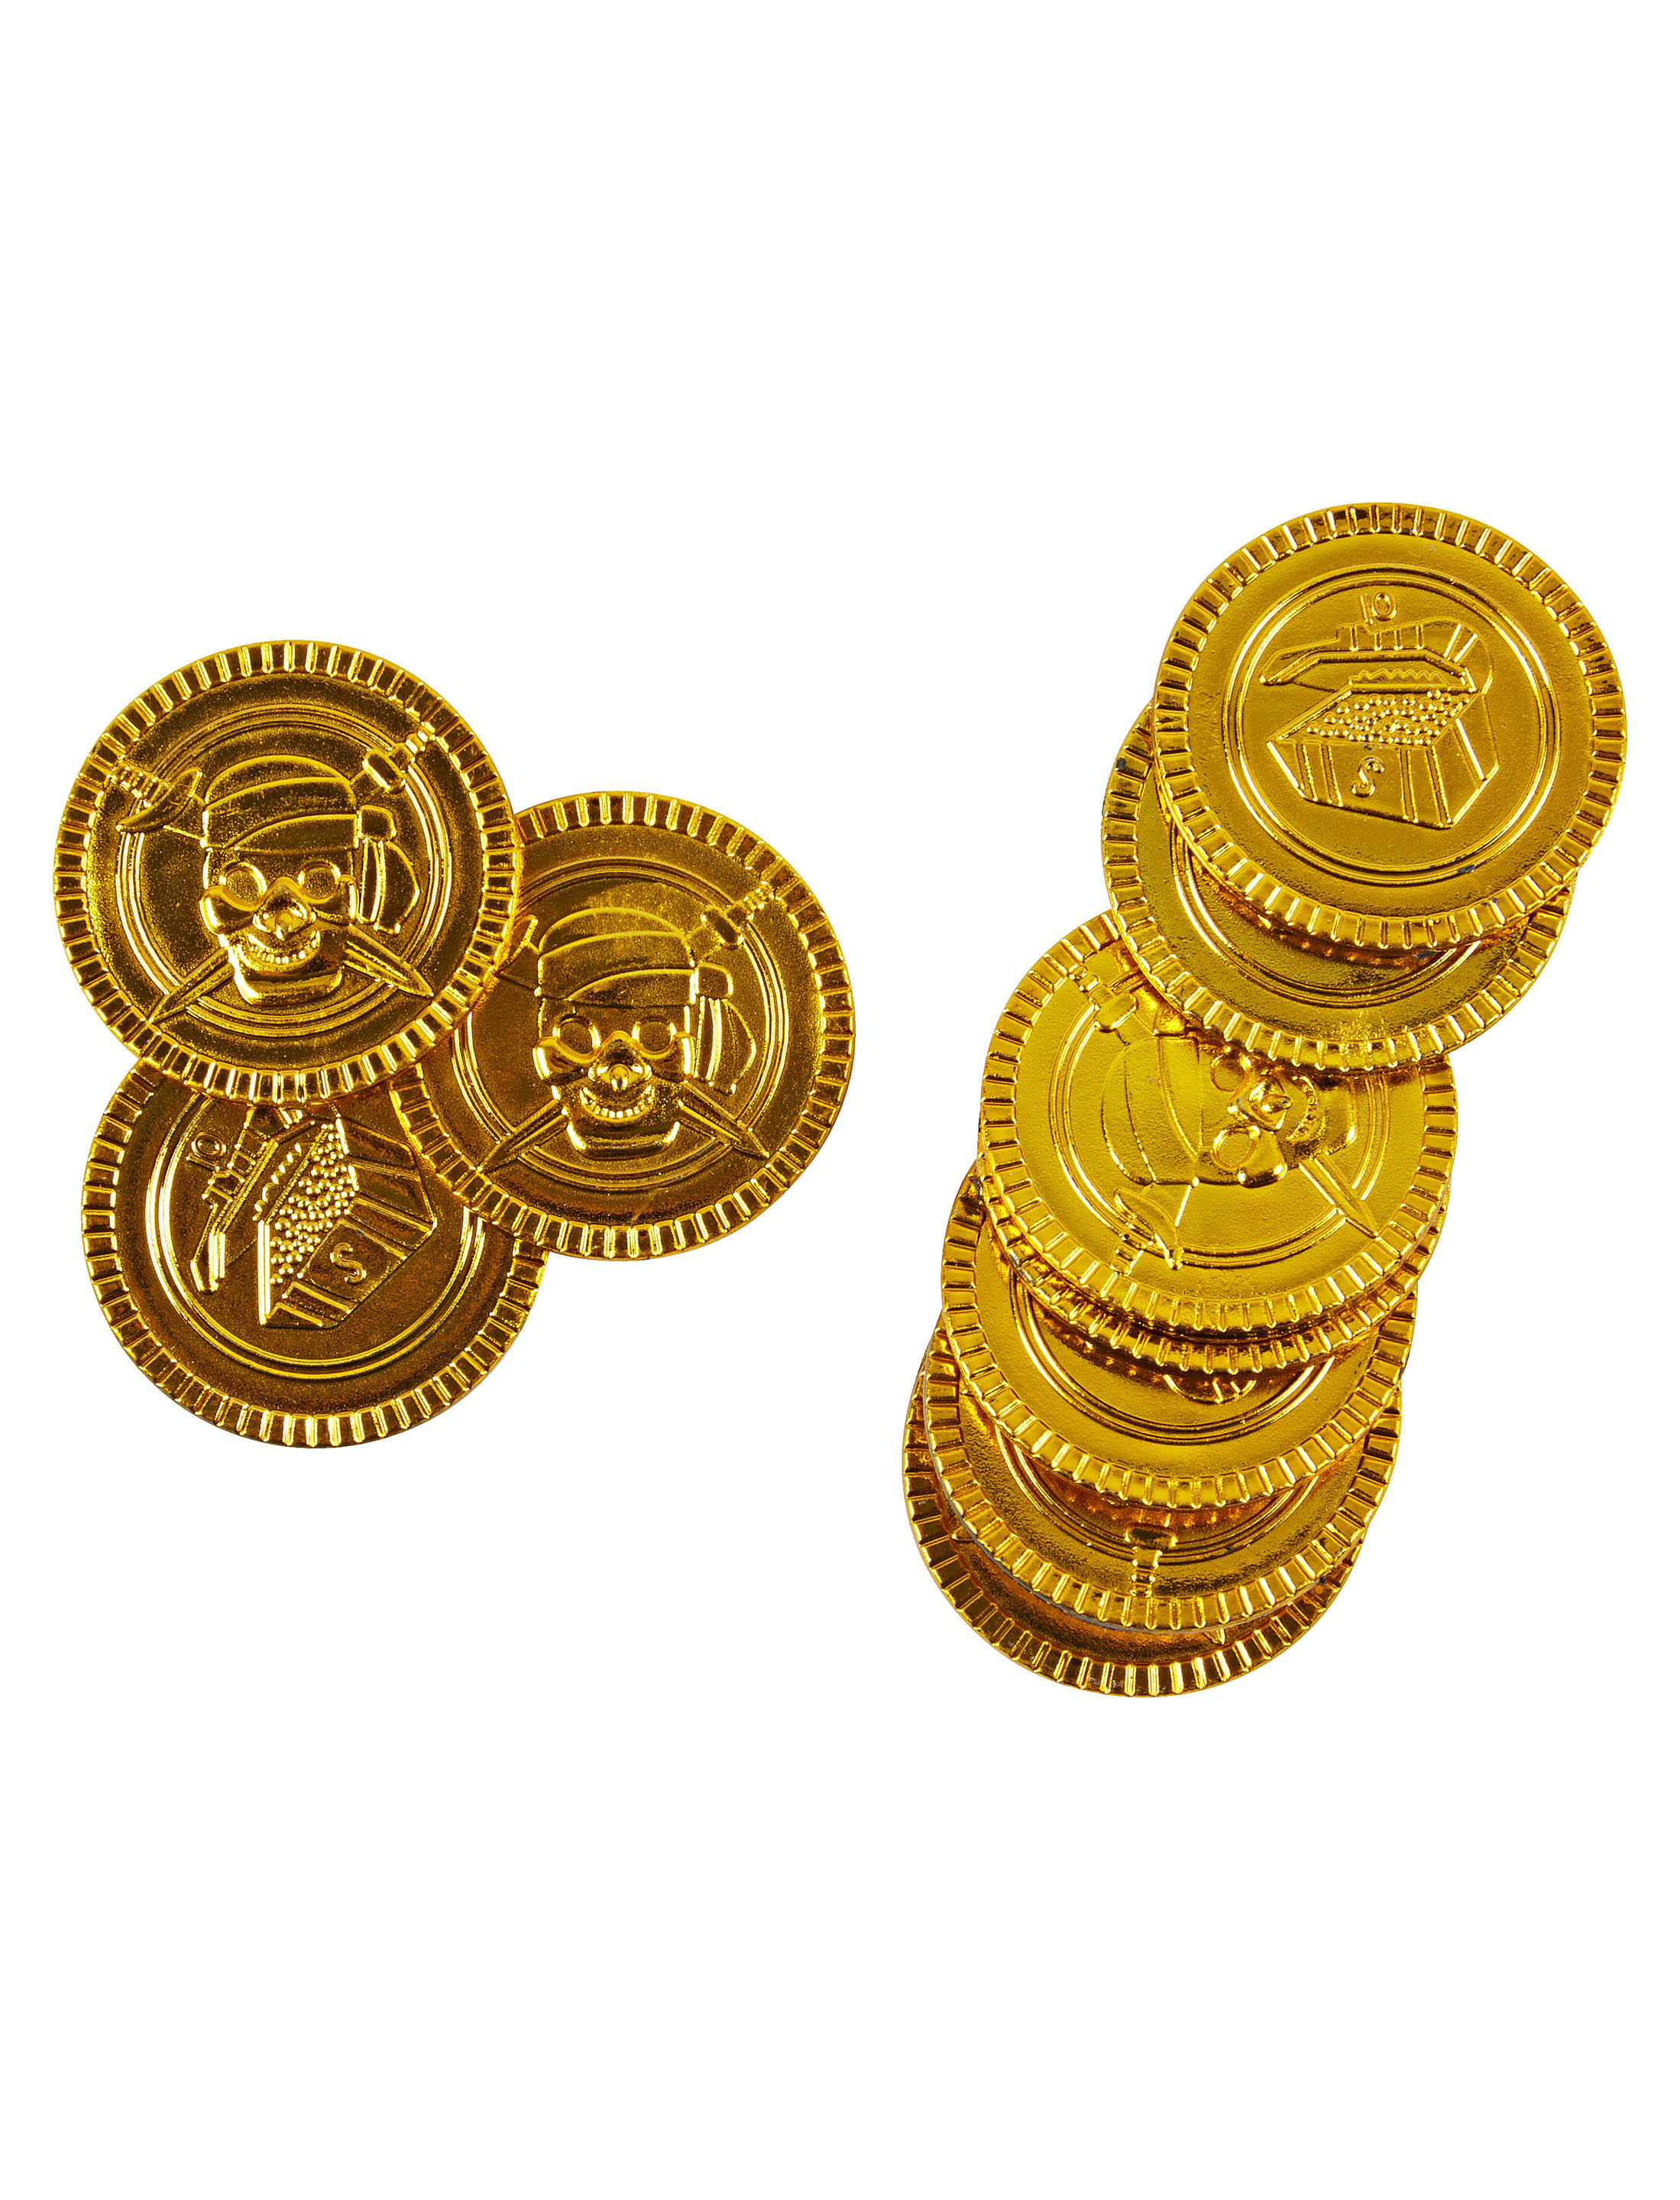 Goldmünzen 50 Stk.